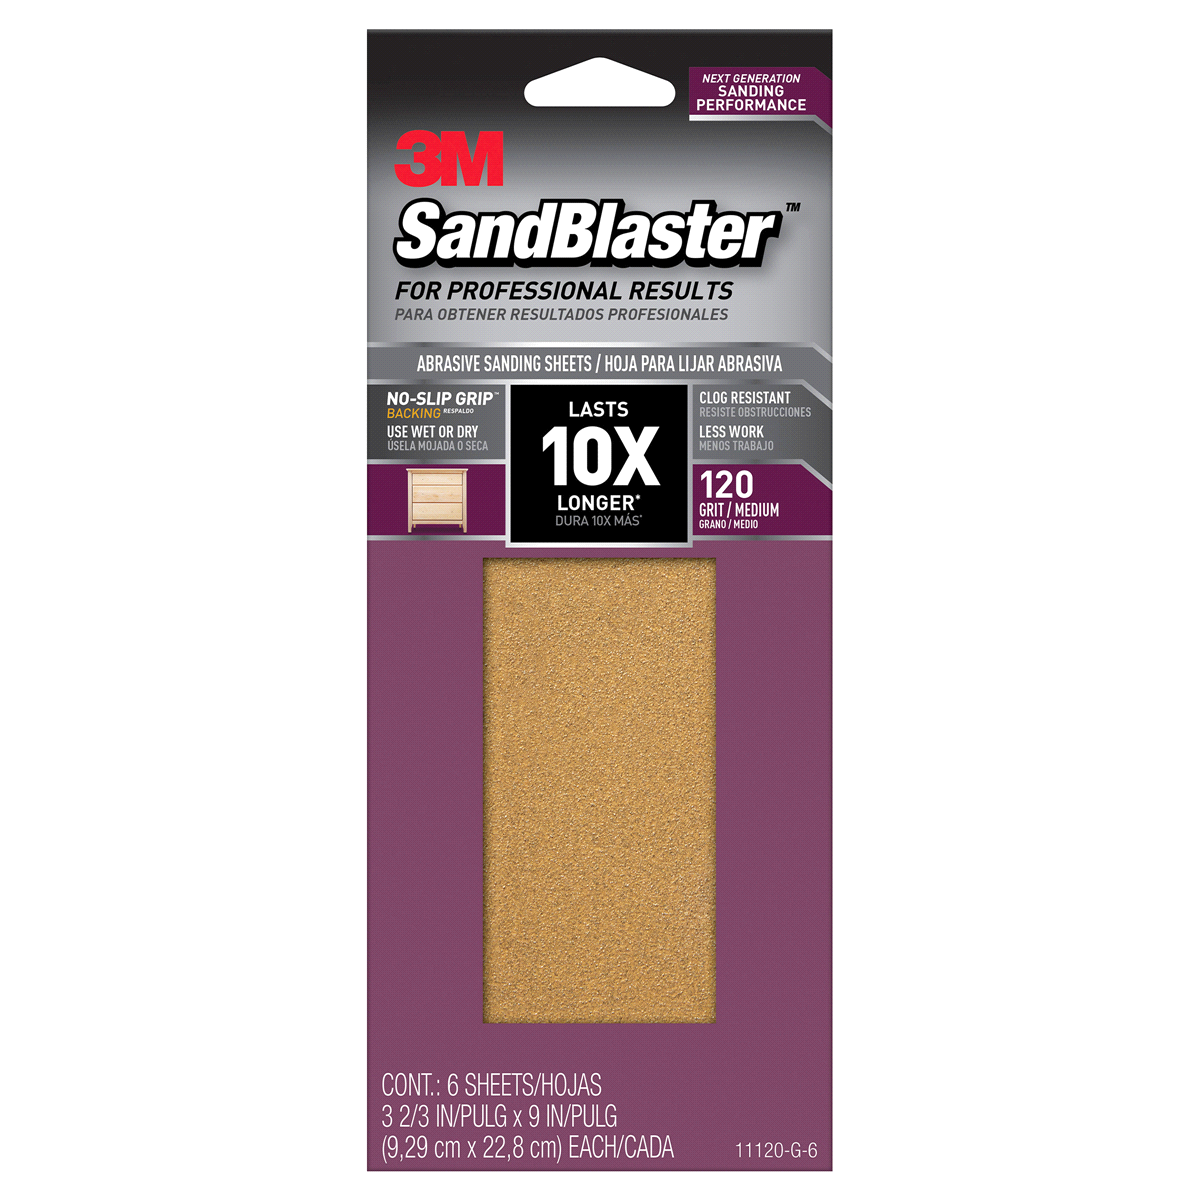 slide 1 of 1, 3M SandBlaster Sandpaper with NO-SLIP GRIP Backing, Gold, 3-2/3 inch x 9 inch, 6 Sheets/Pack, 1 ct